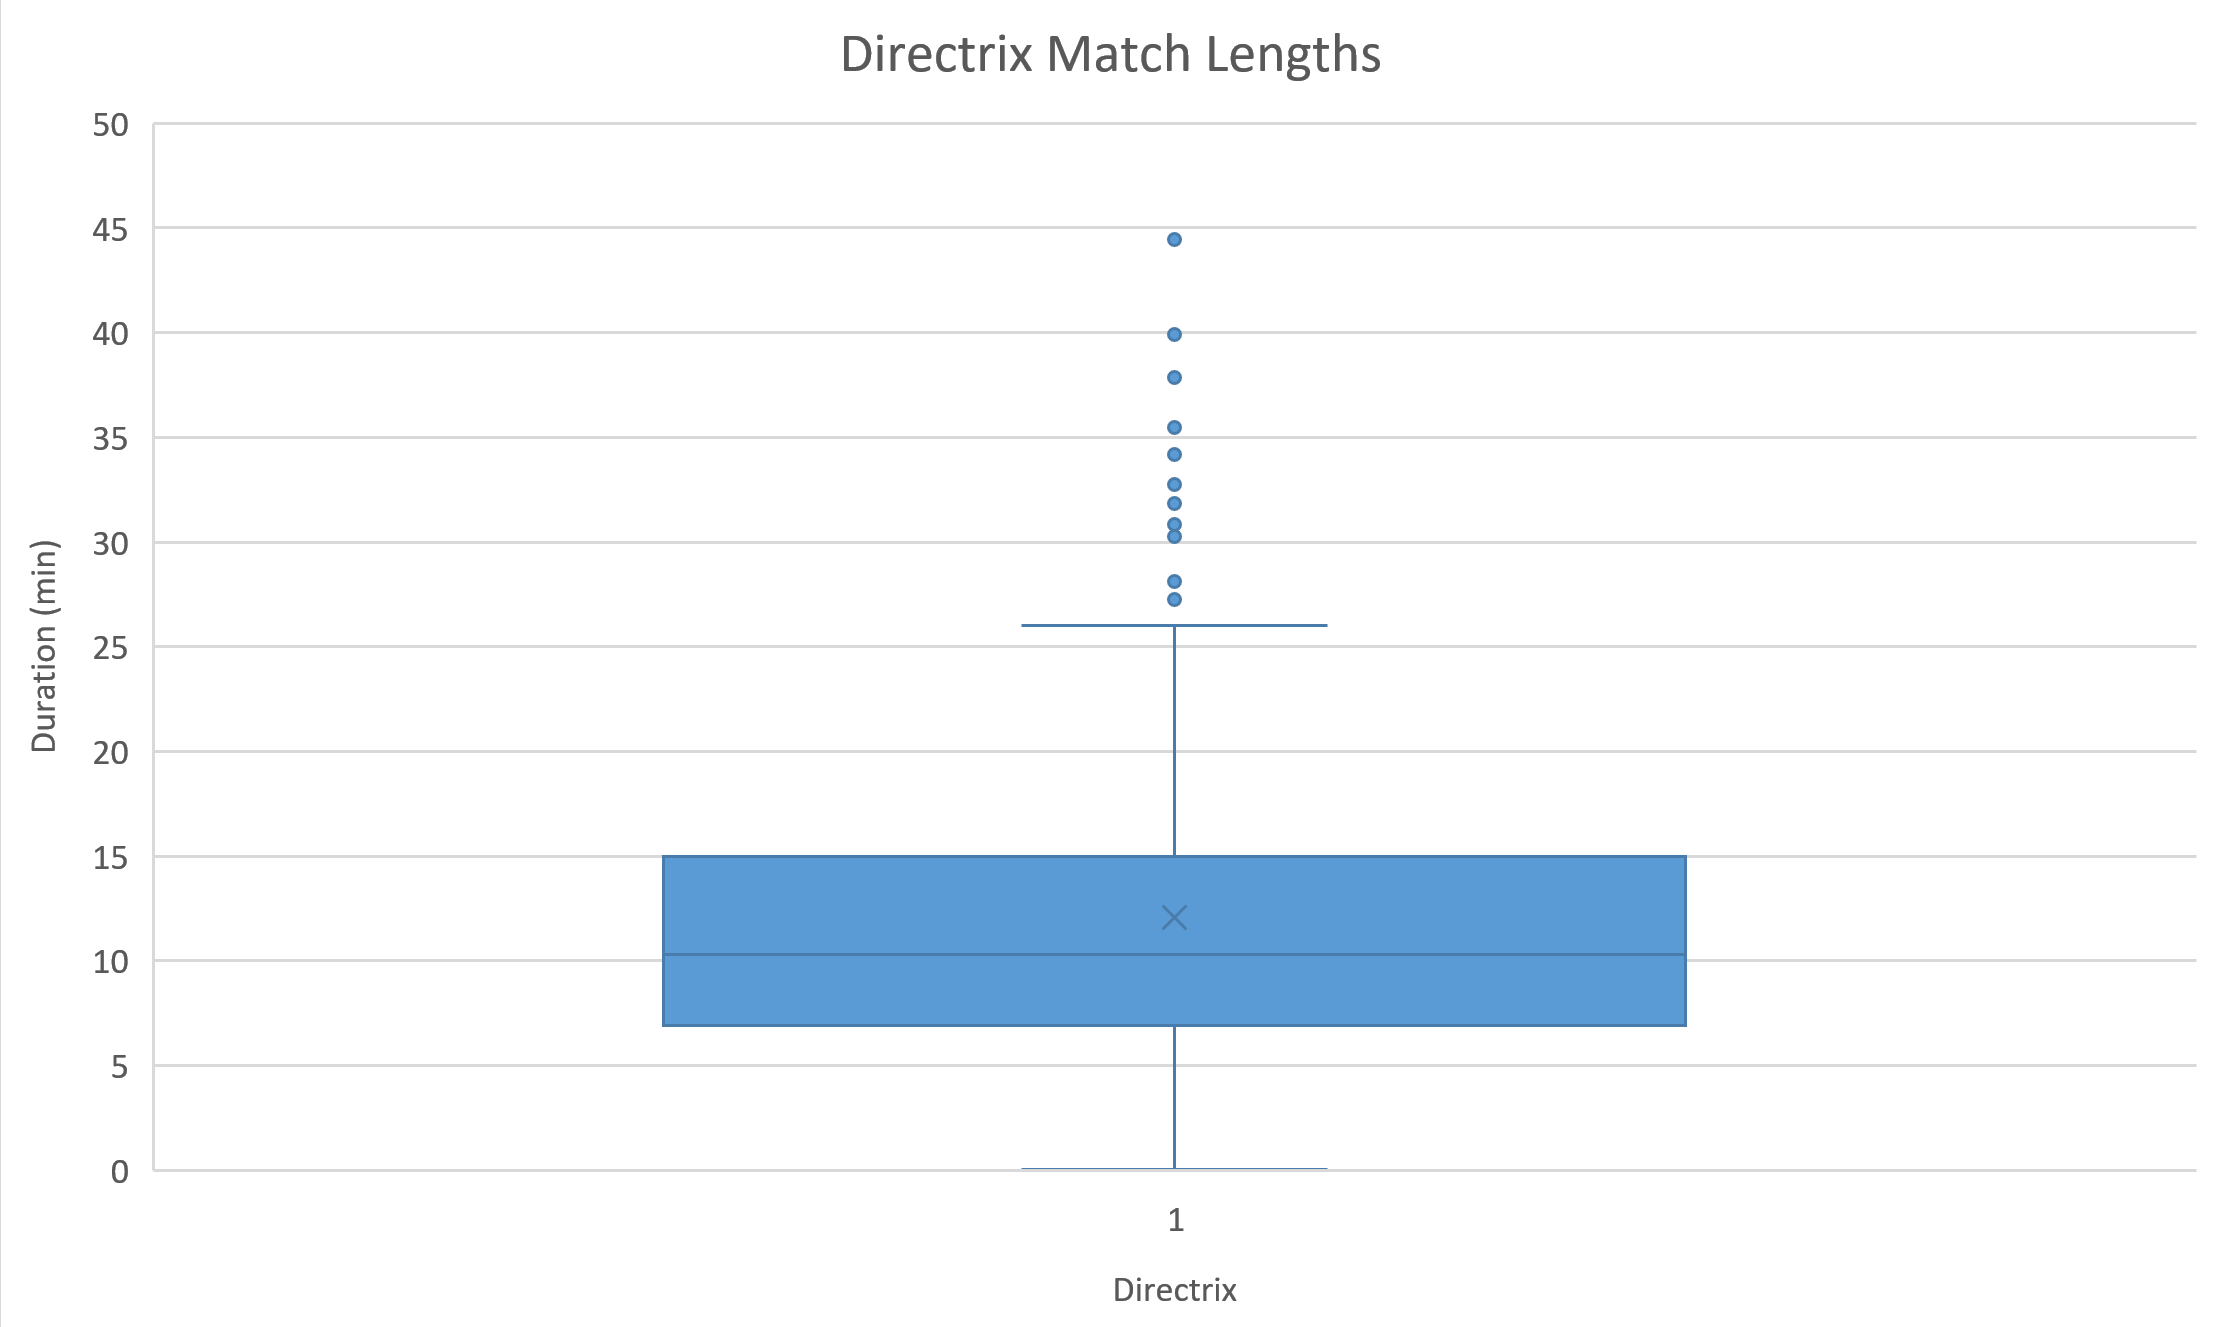 Directrix Match Length Distribution